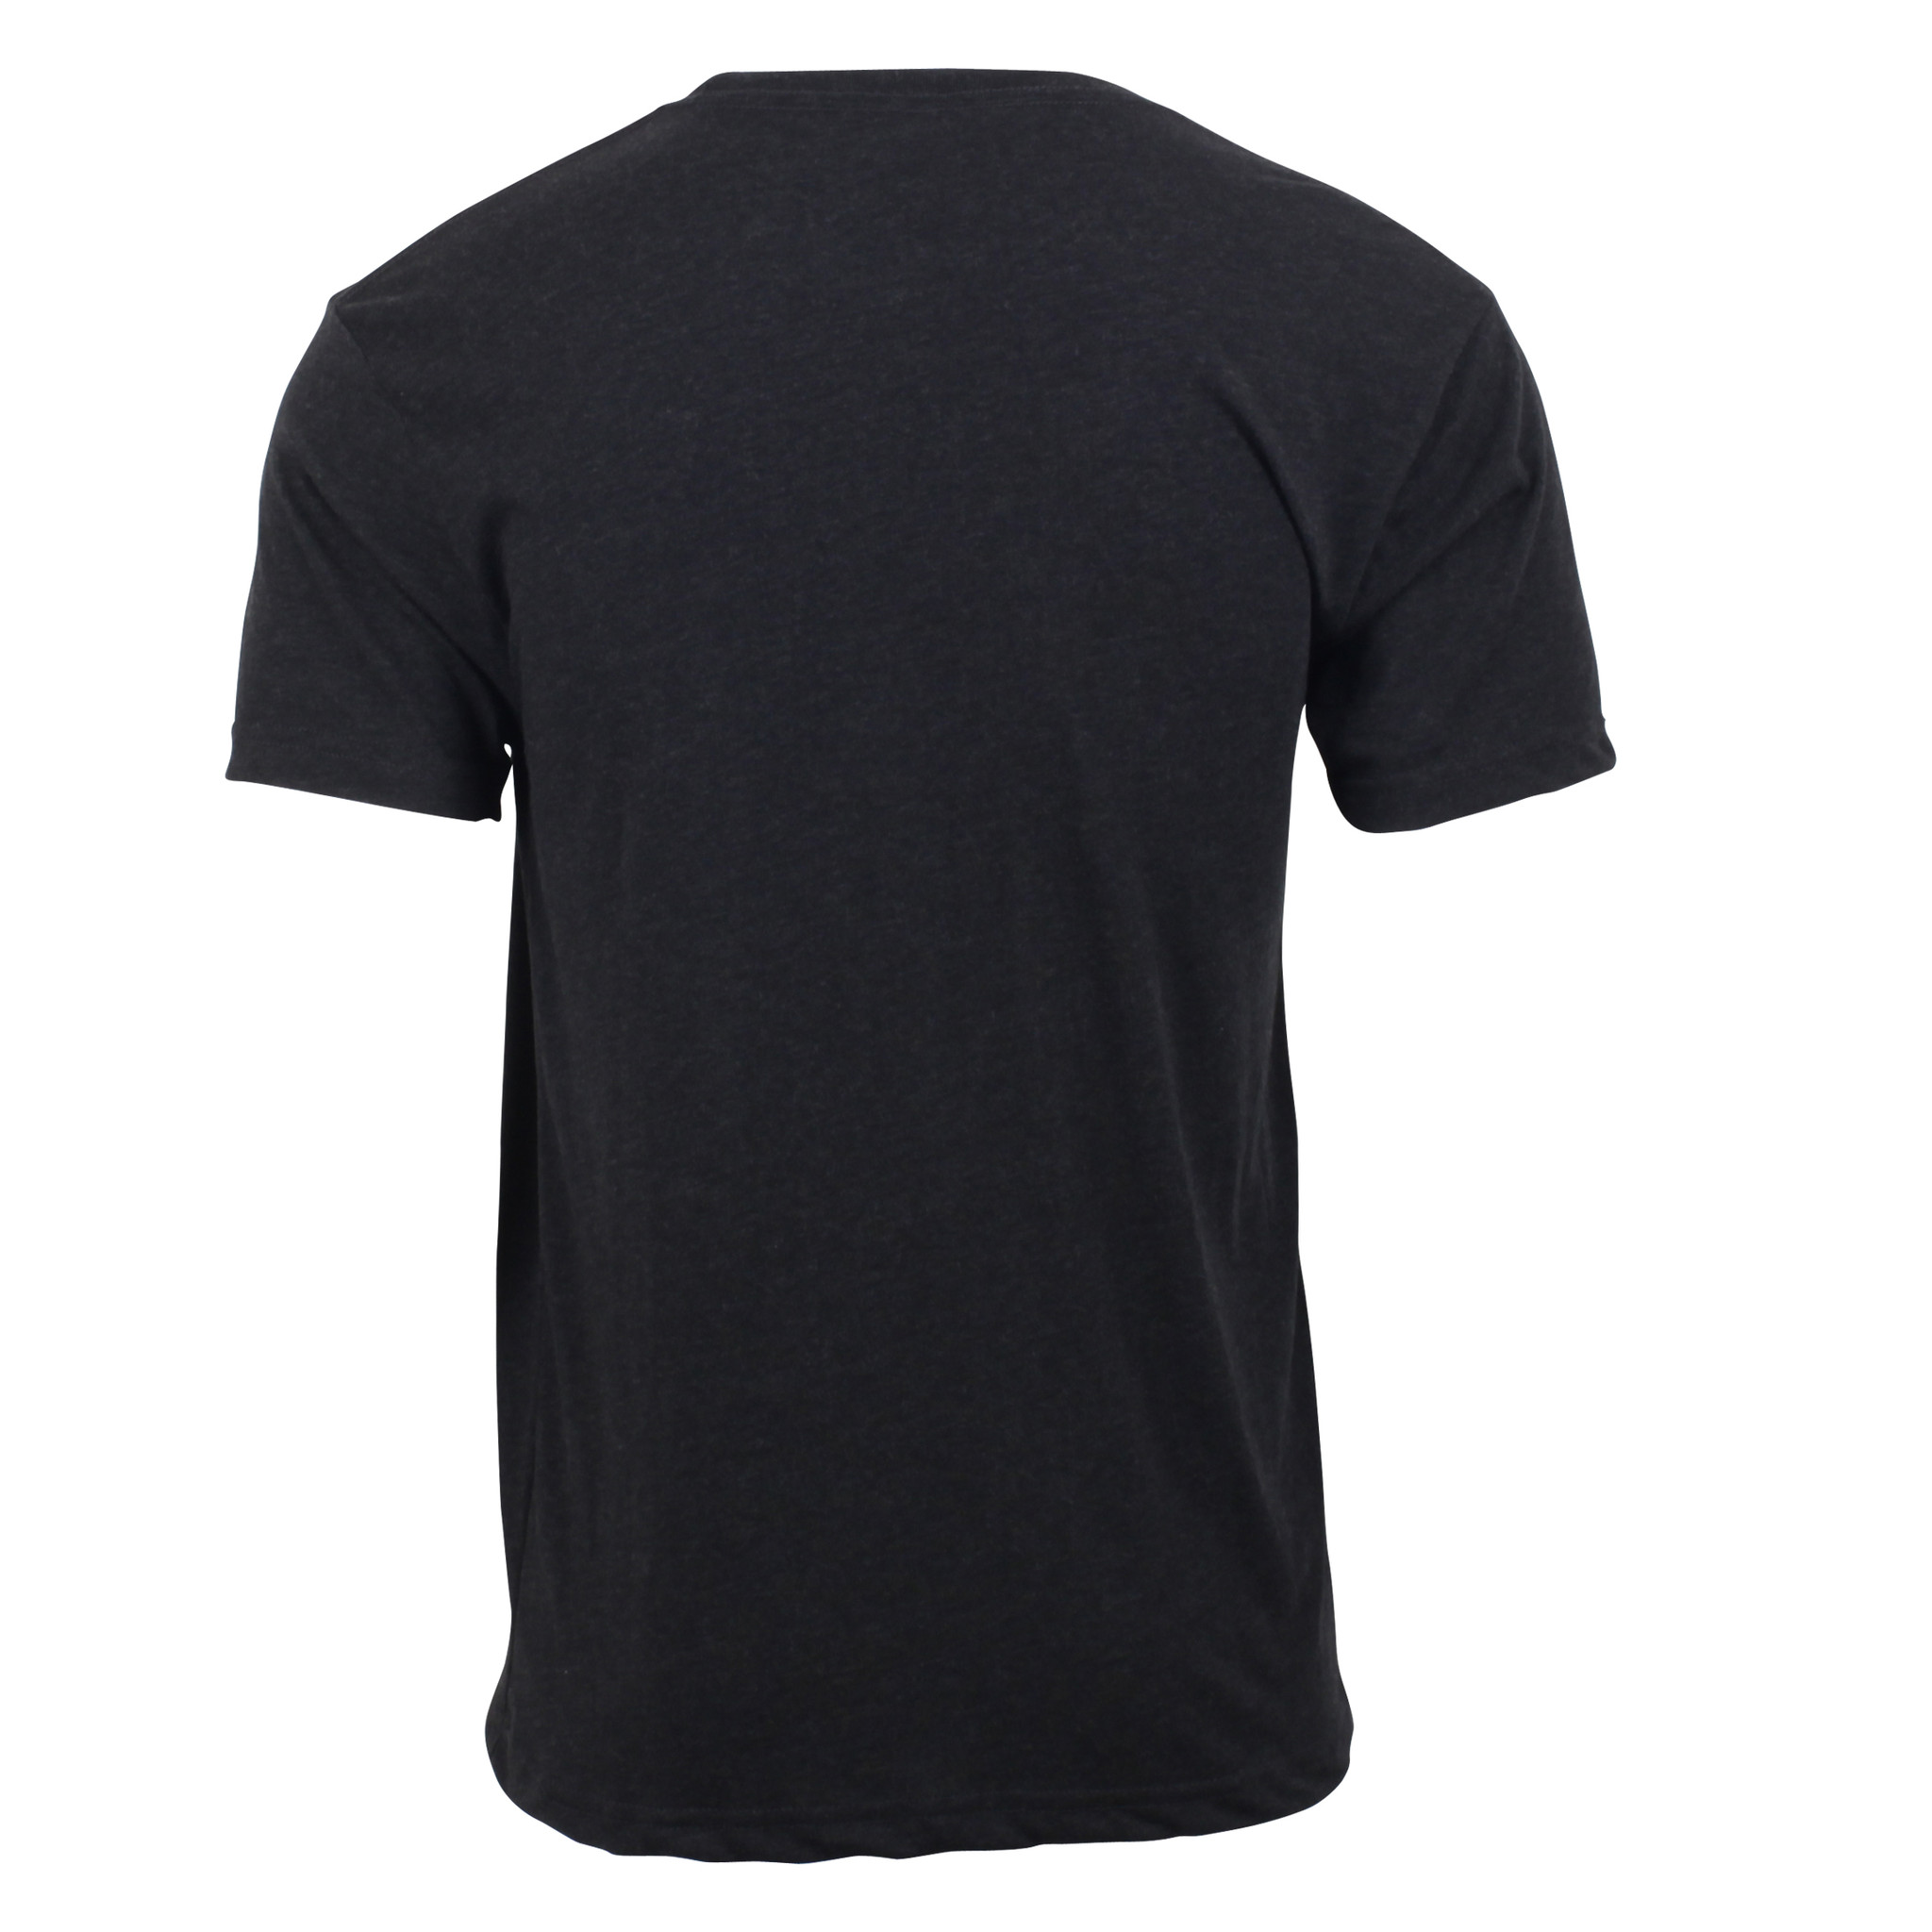 Black T Shirts Front And Back | Images Guru